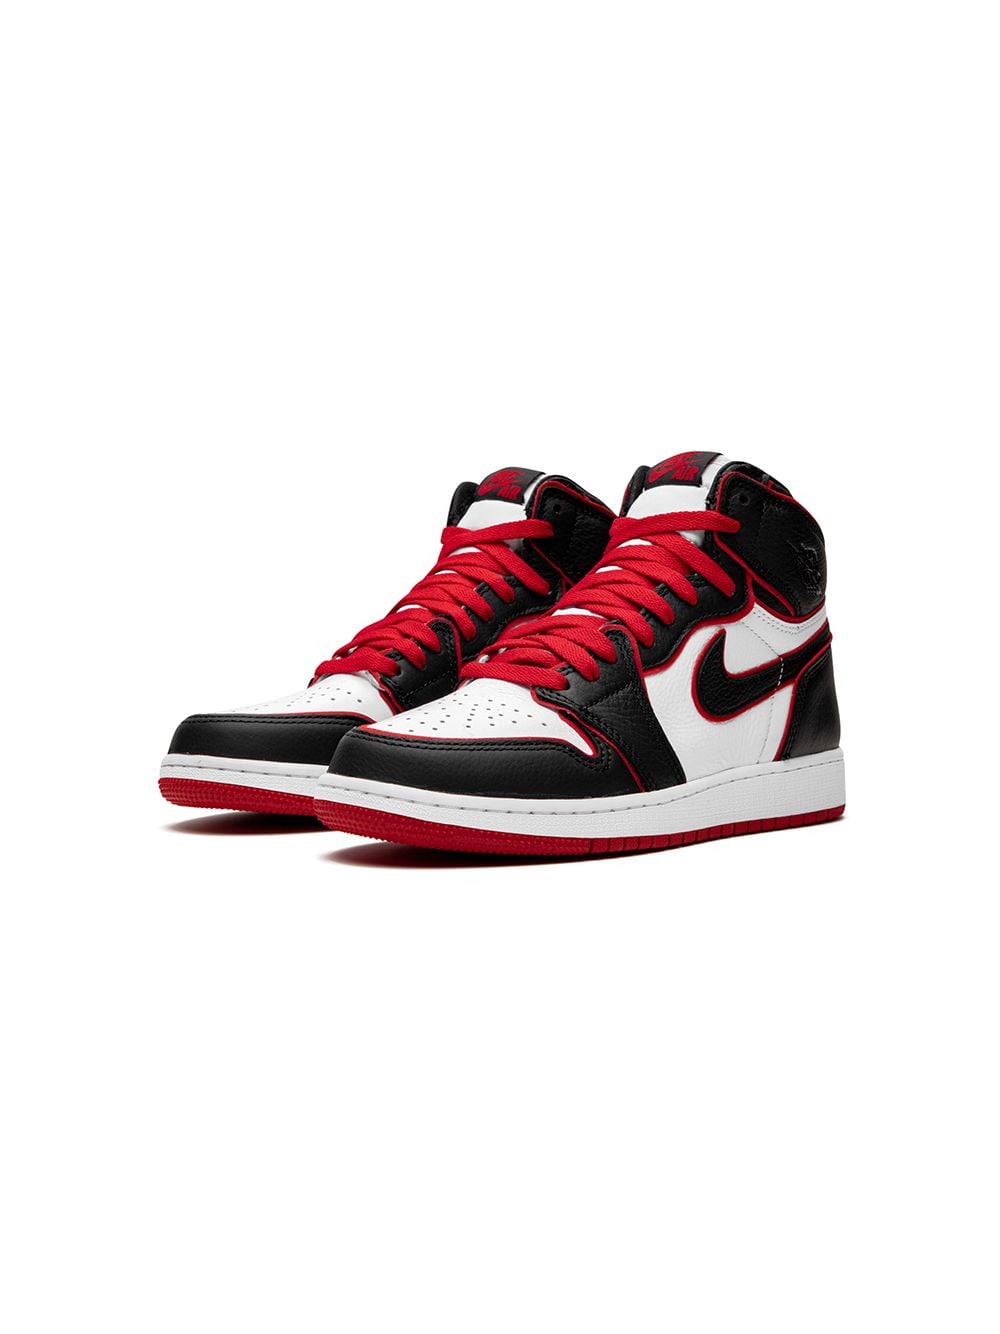 Shop black \u0026 red Nike Kids Air Jordan 1 